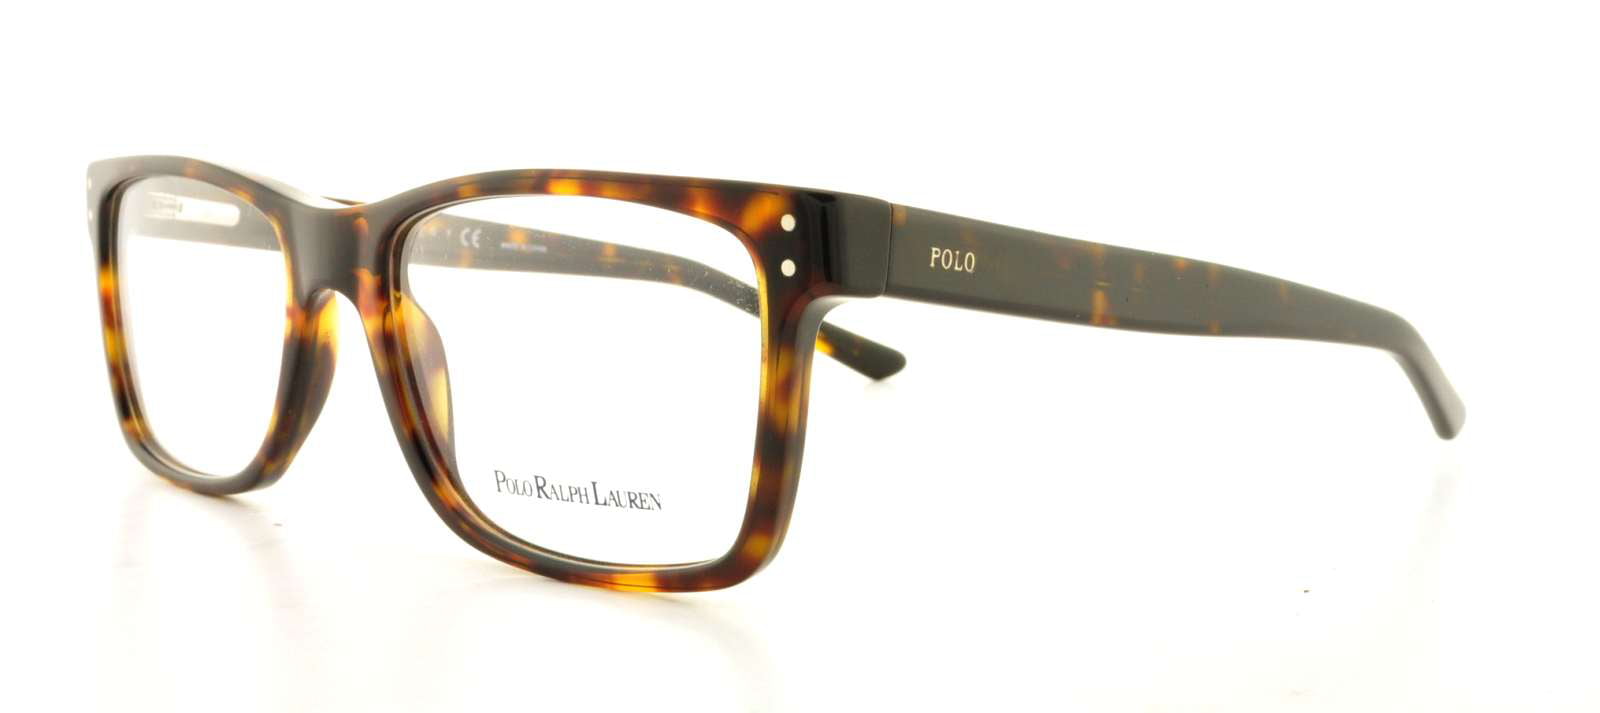 polo 2057 glasses